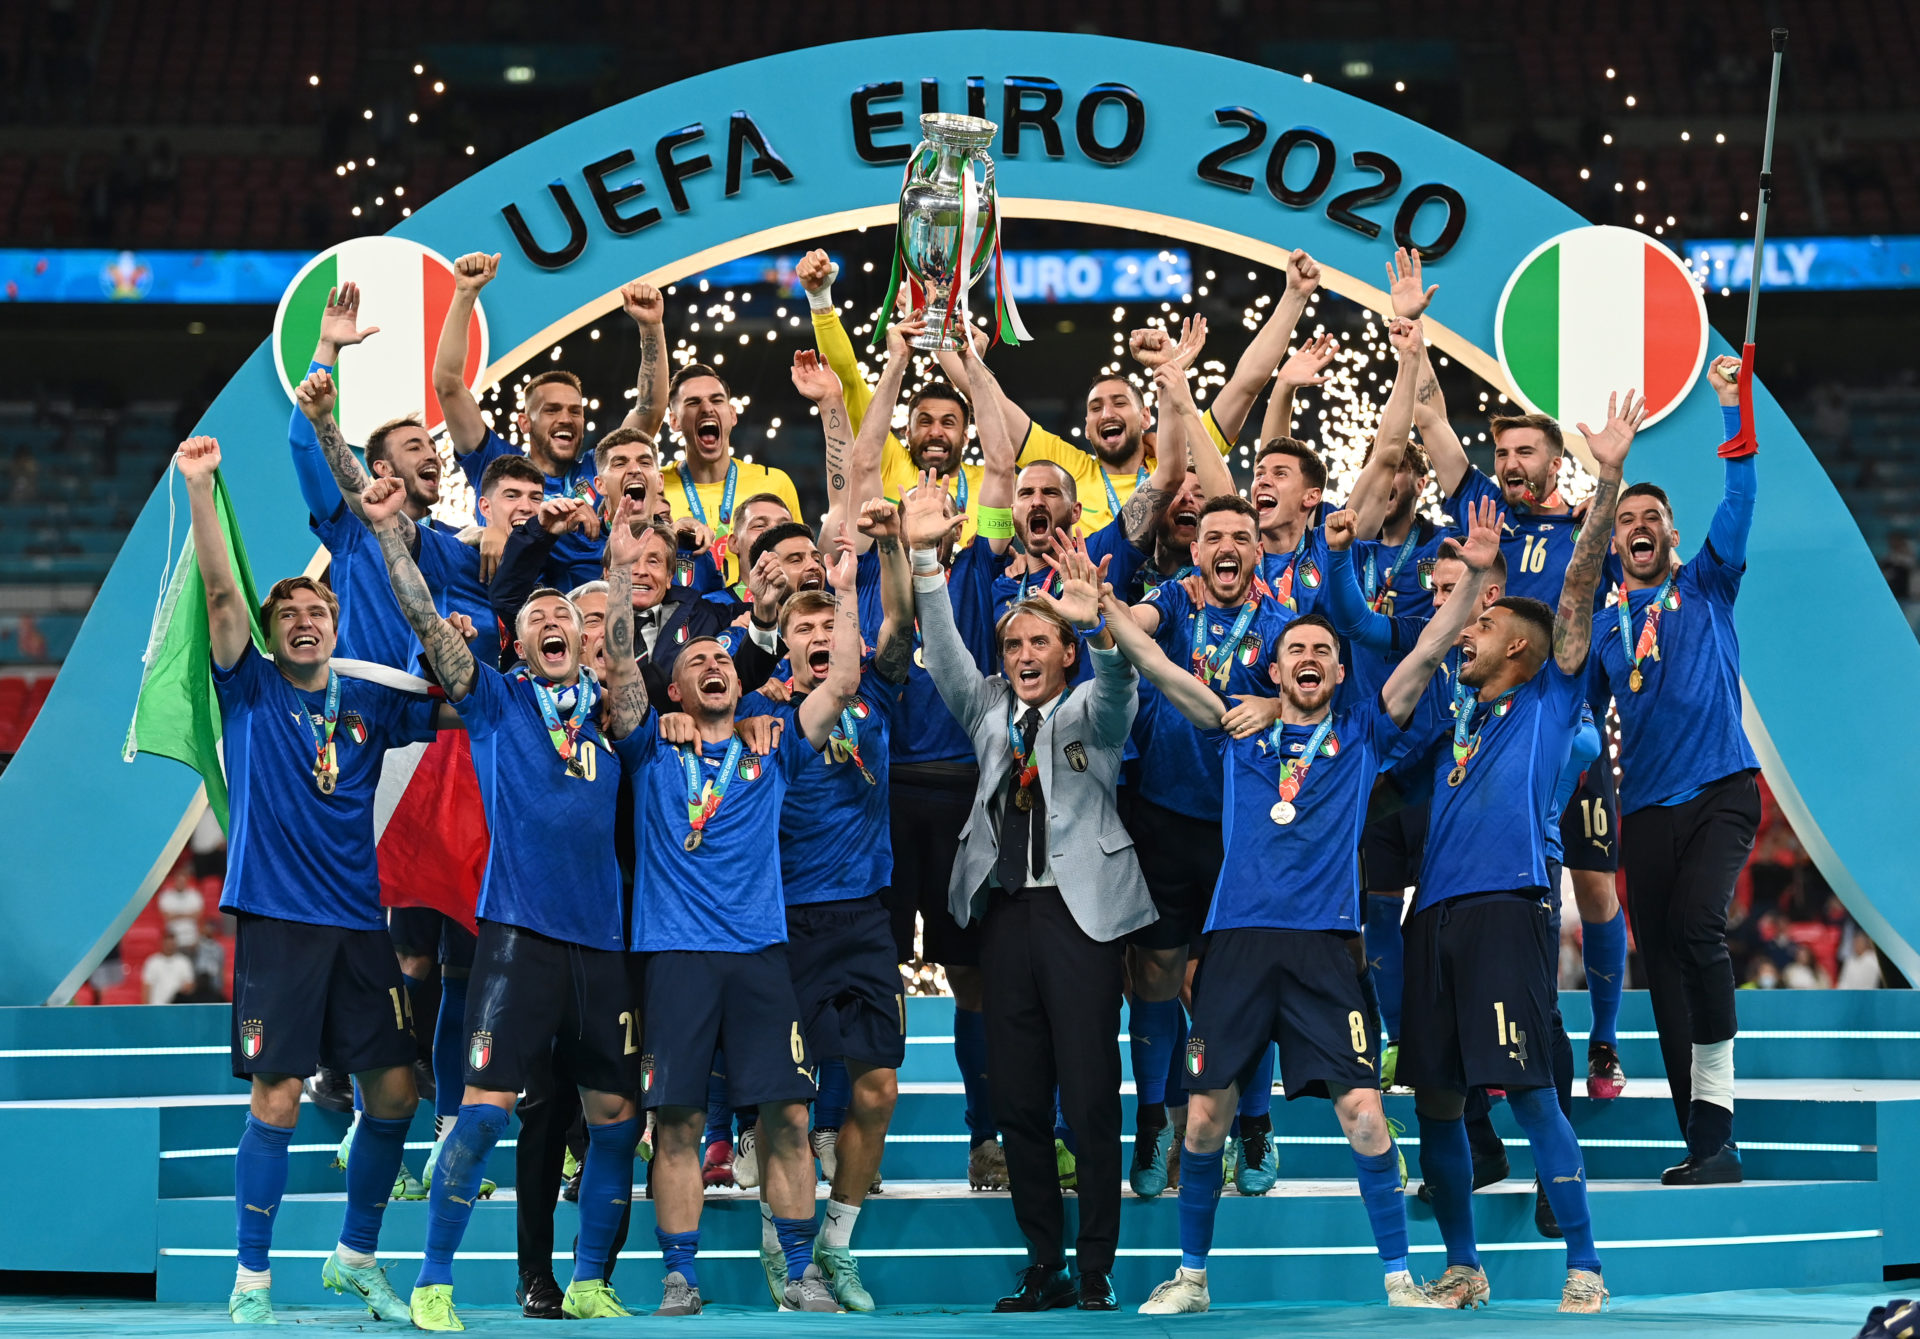 Italy v england uefa euro 2020 final © uefa 2021